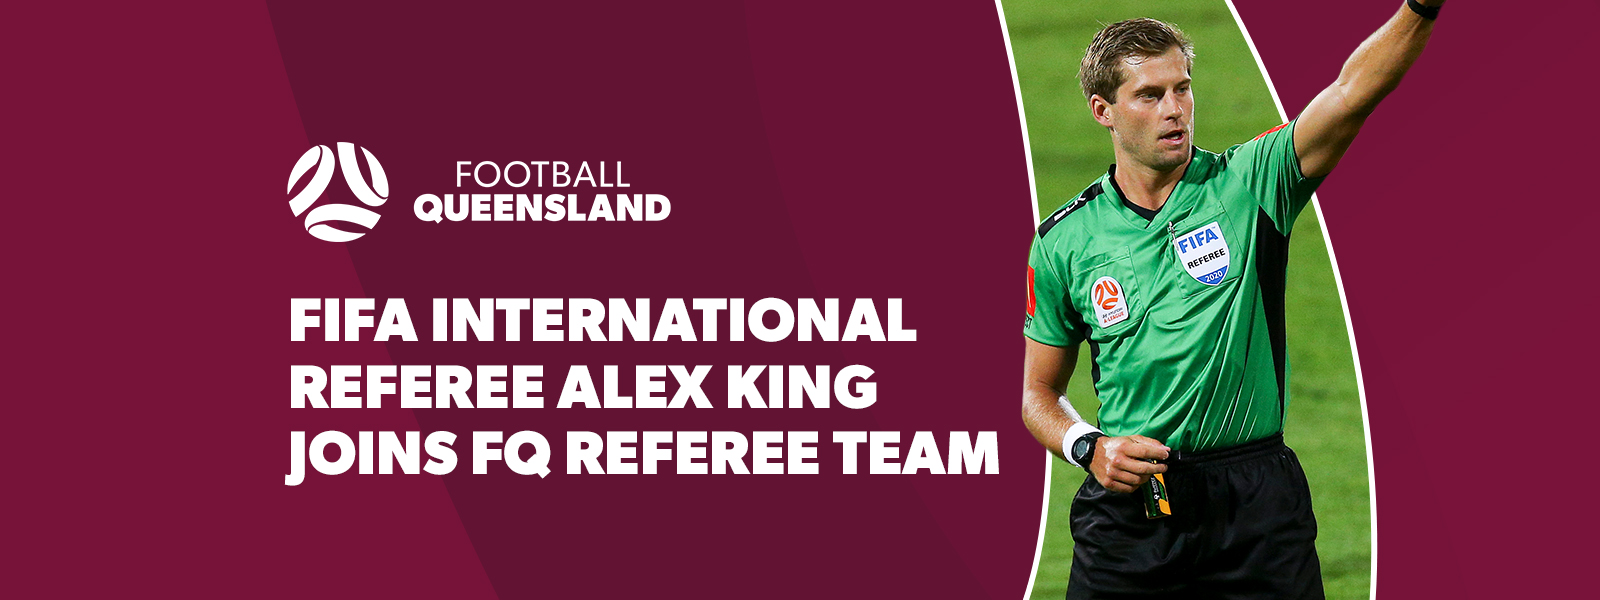 FIFA international referee Alex King joins QF refereeing team